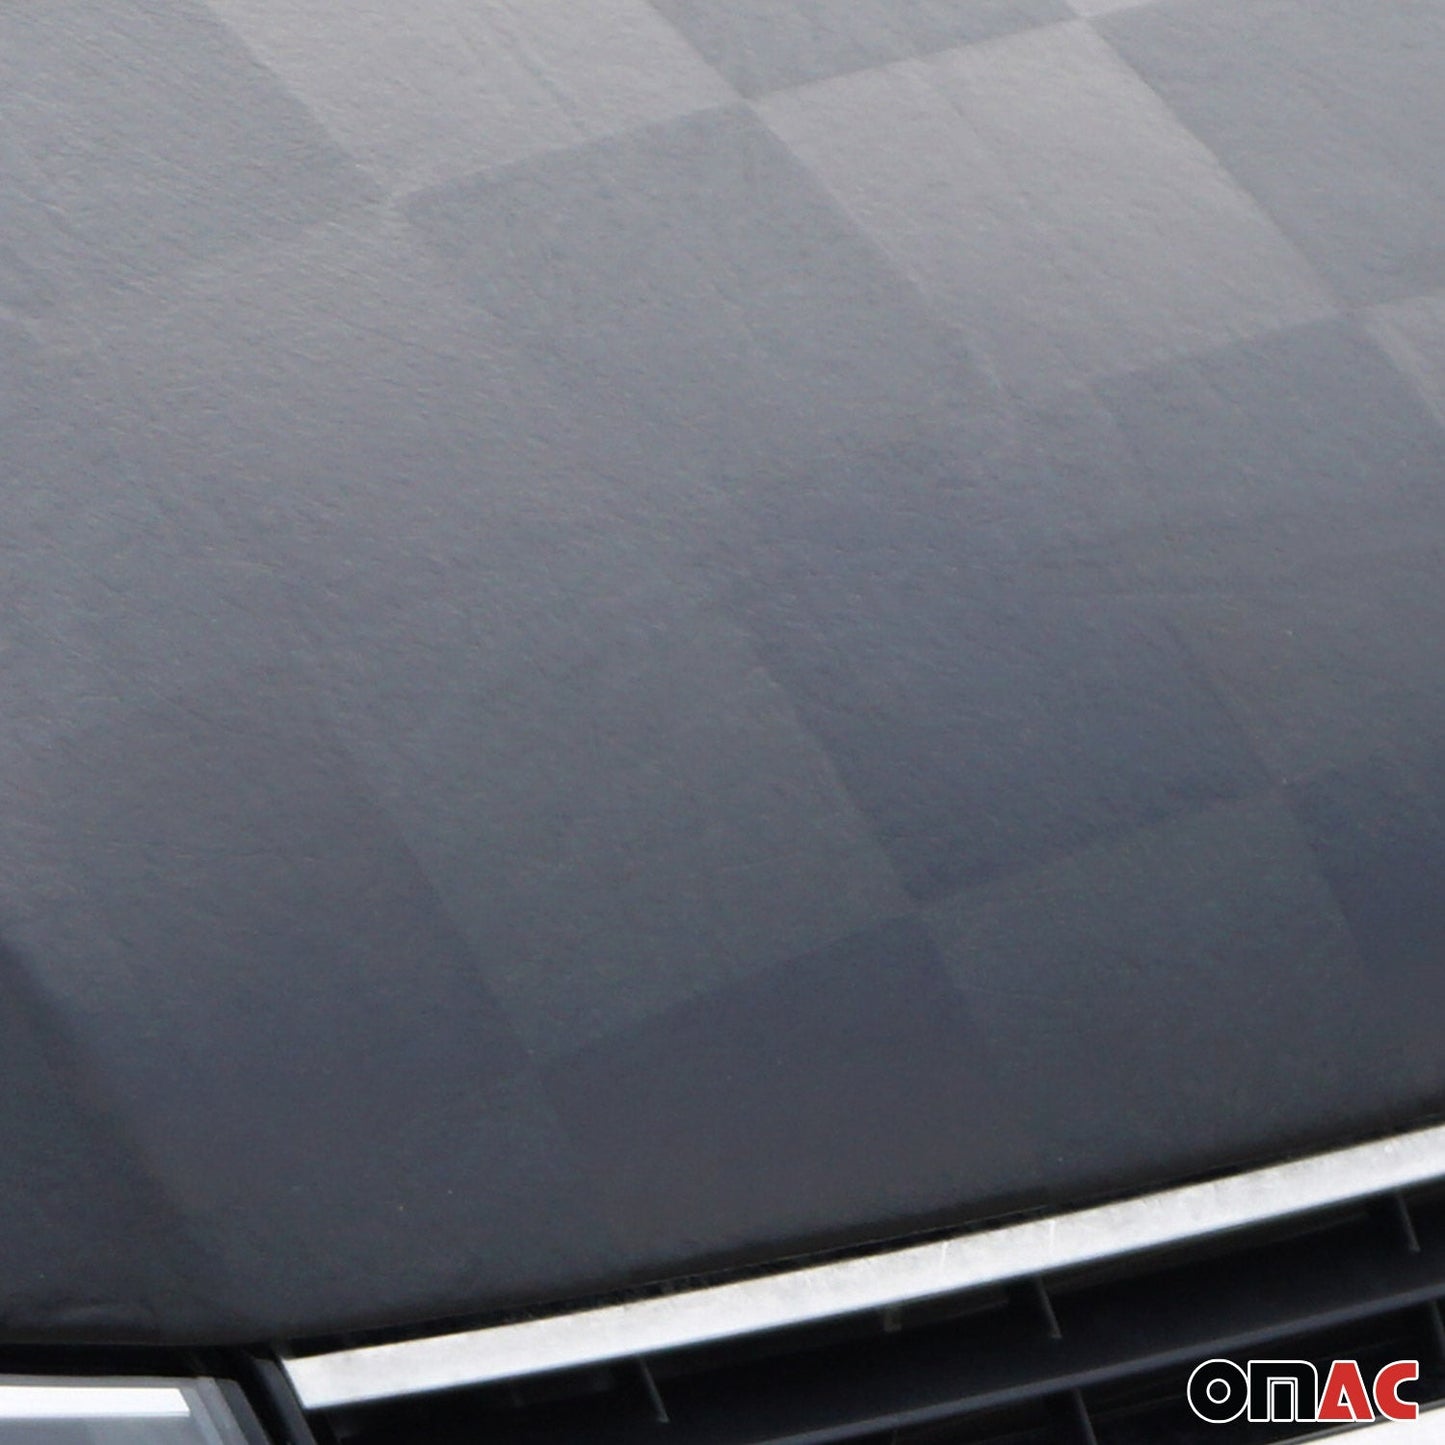 OMAC Car Bonnet Mask Hood Bra for Volkswagen Passat 2015-2019 Black Chequered 7545BSZ4CBG